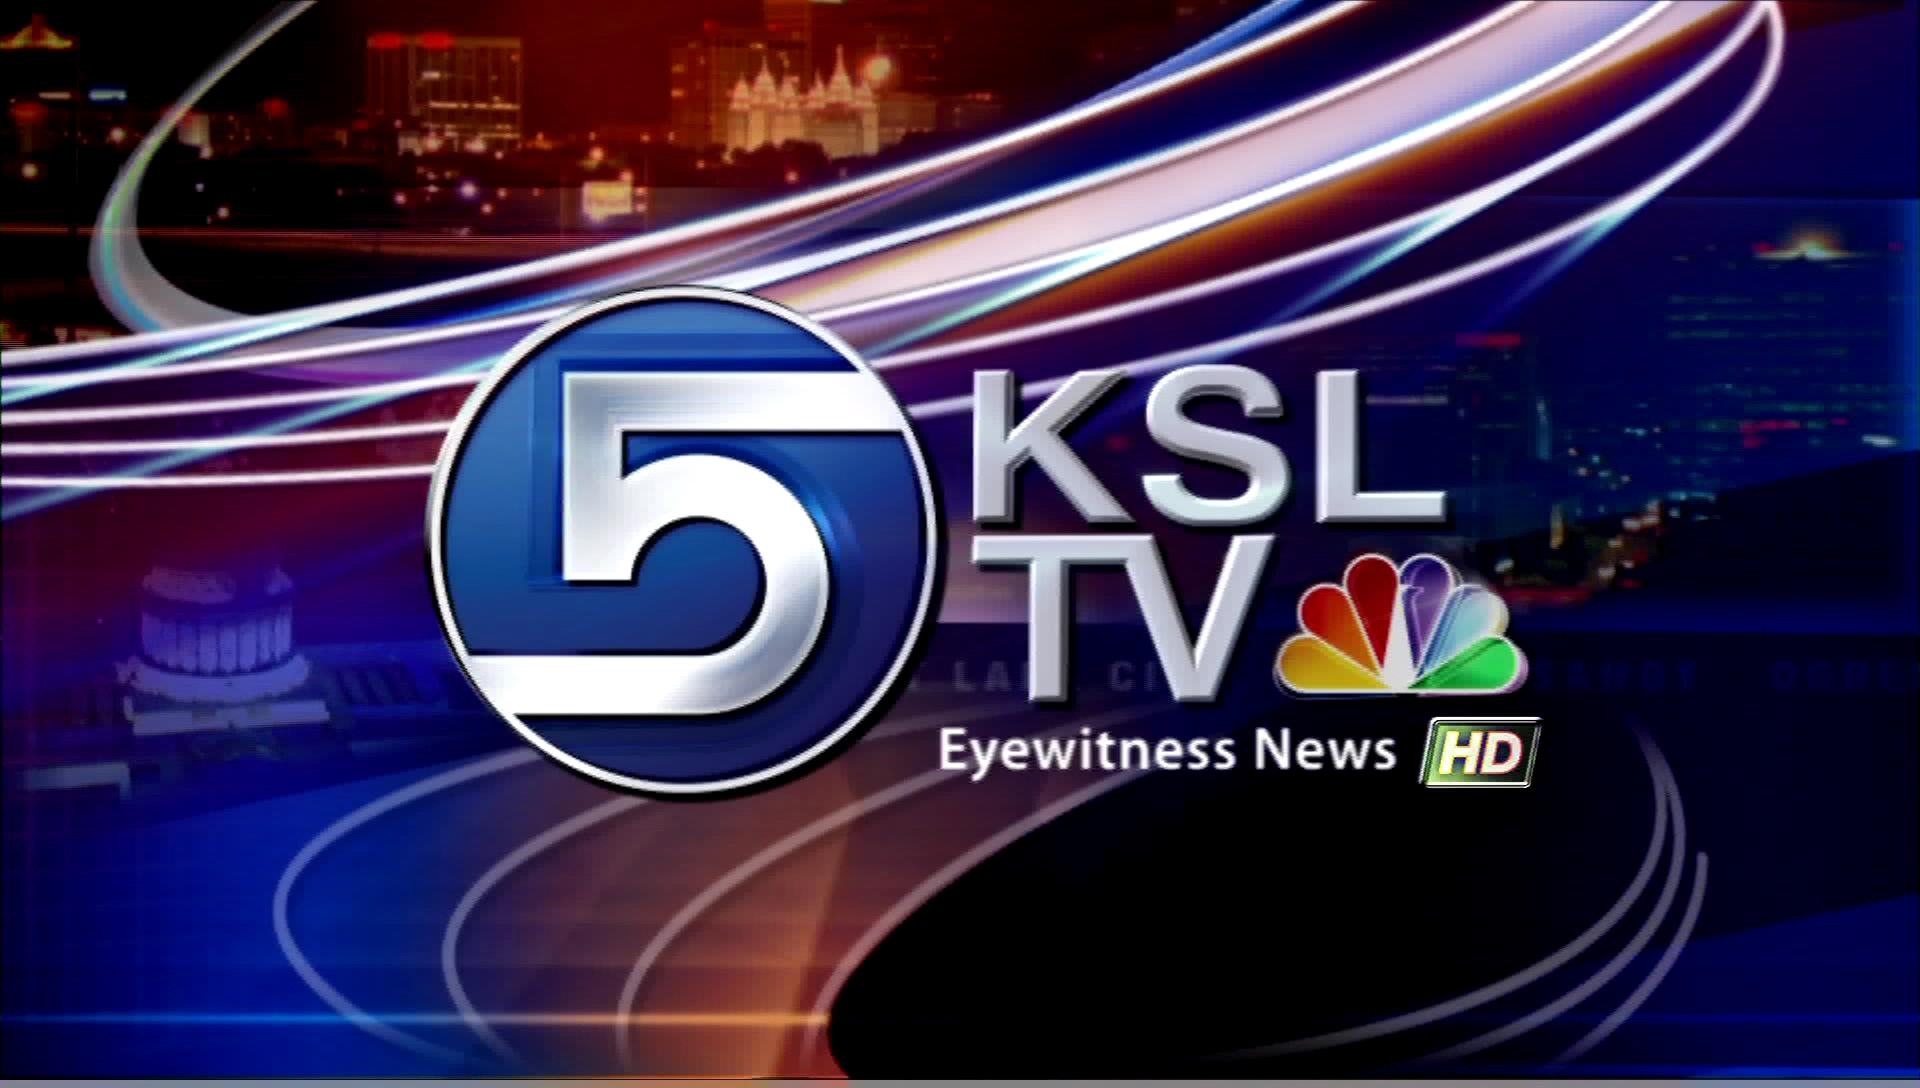 KSL TV Channel 5 Salt Lake City, Utah